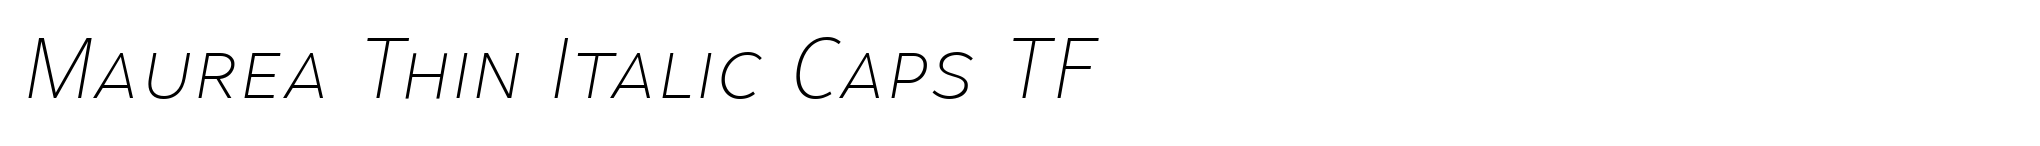 Maurea Thin Italic Caps TF image